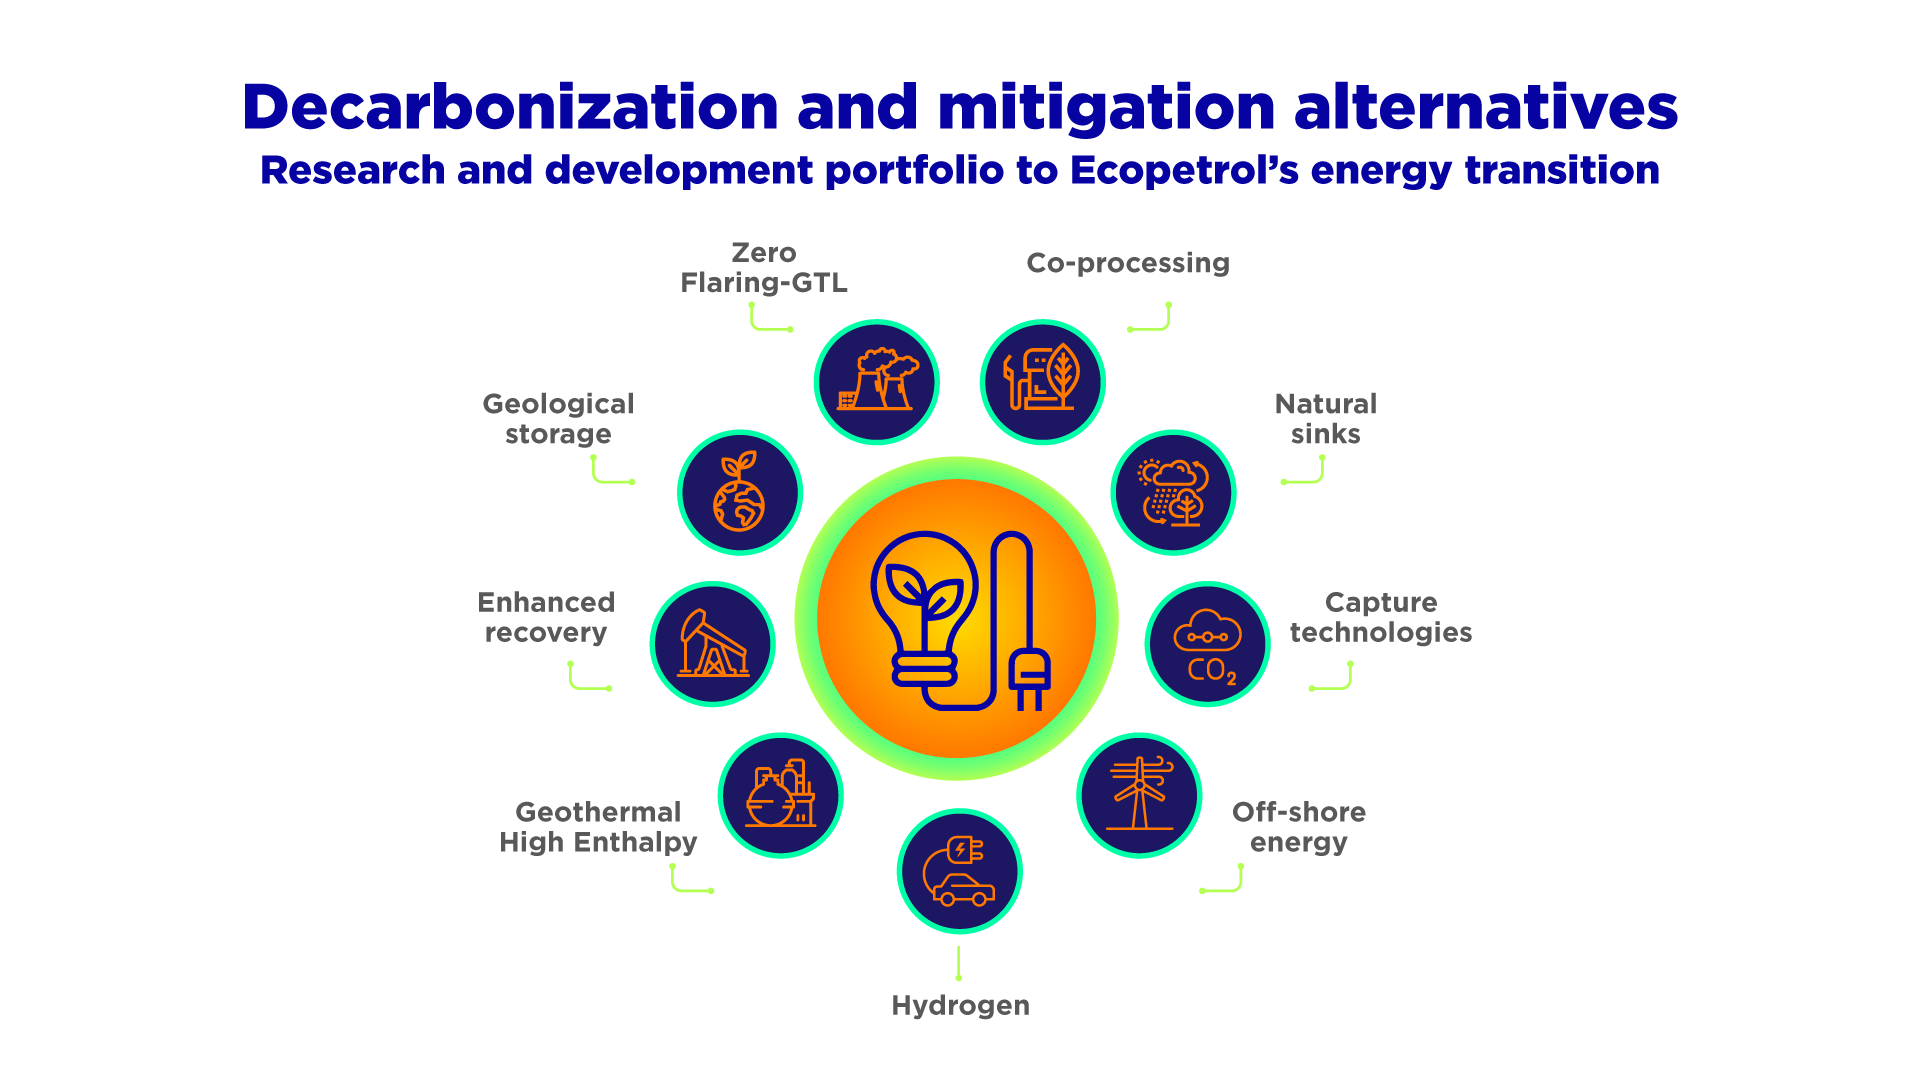 Decarbonization and mitigation alternatives